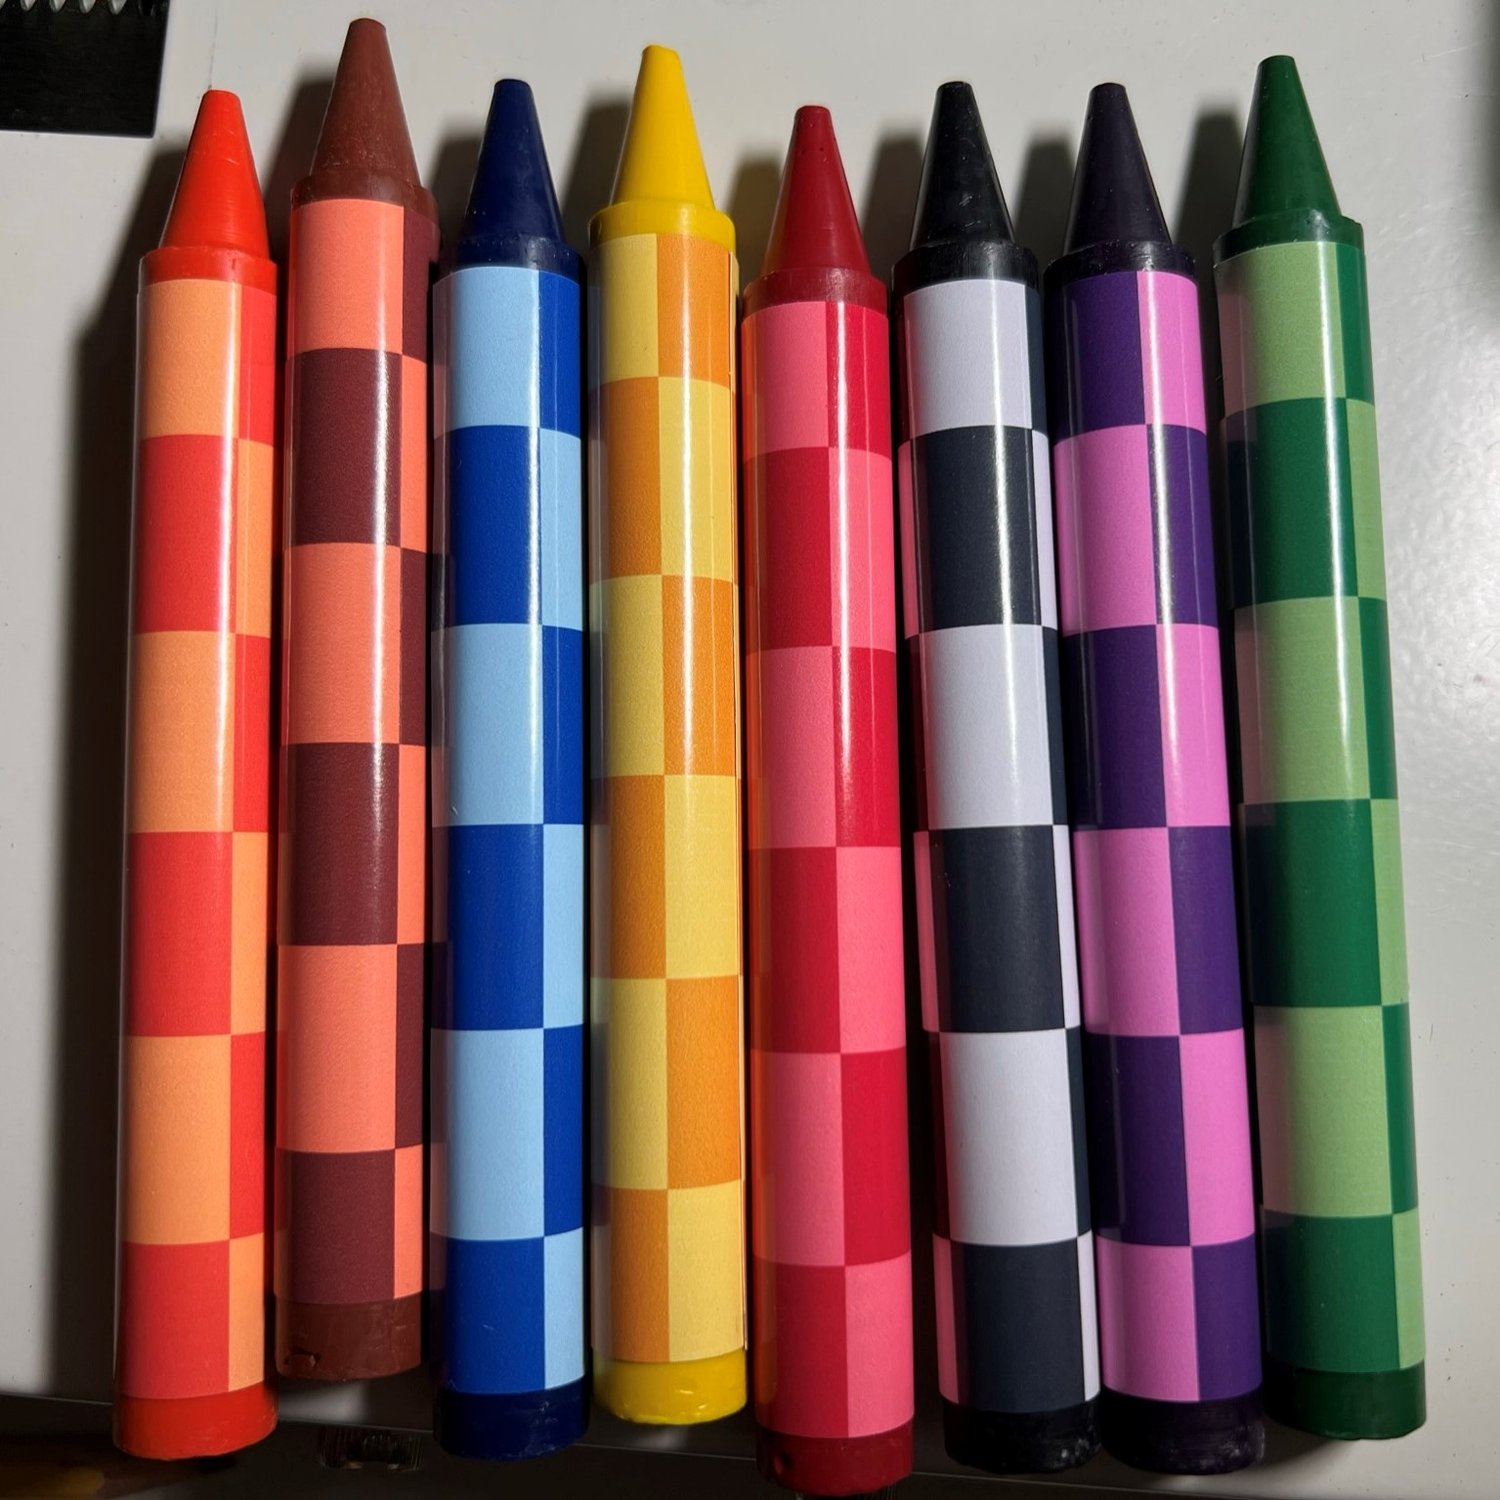 Joe's checkered COLORED jumbo crayons collection (8)